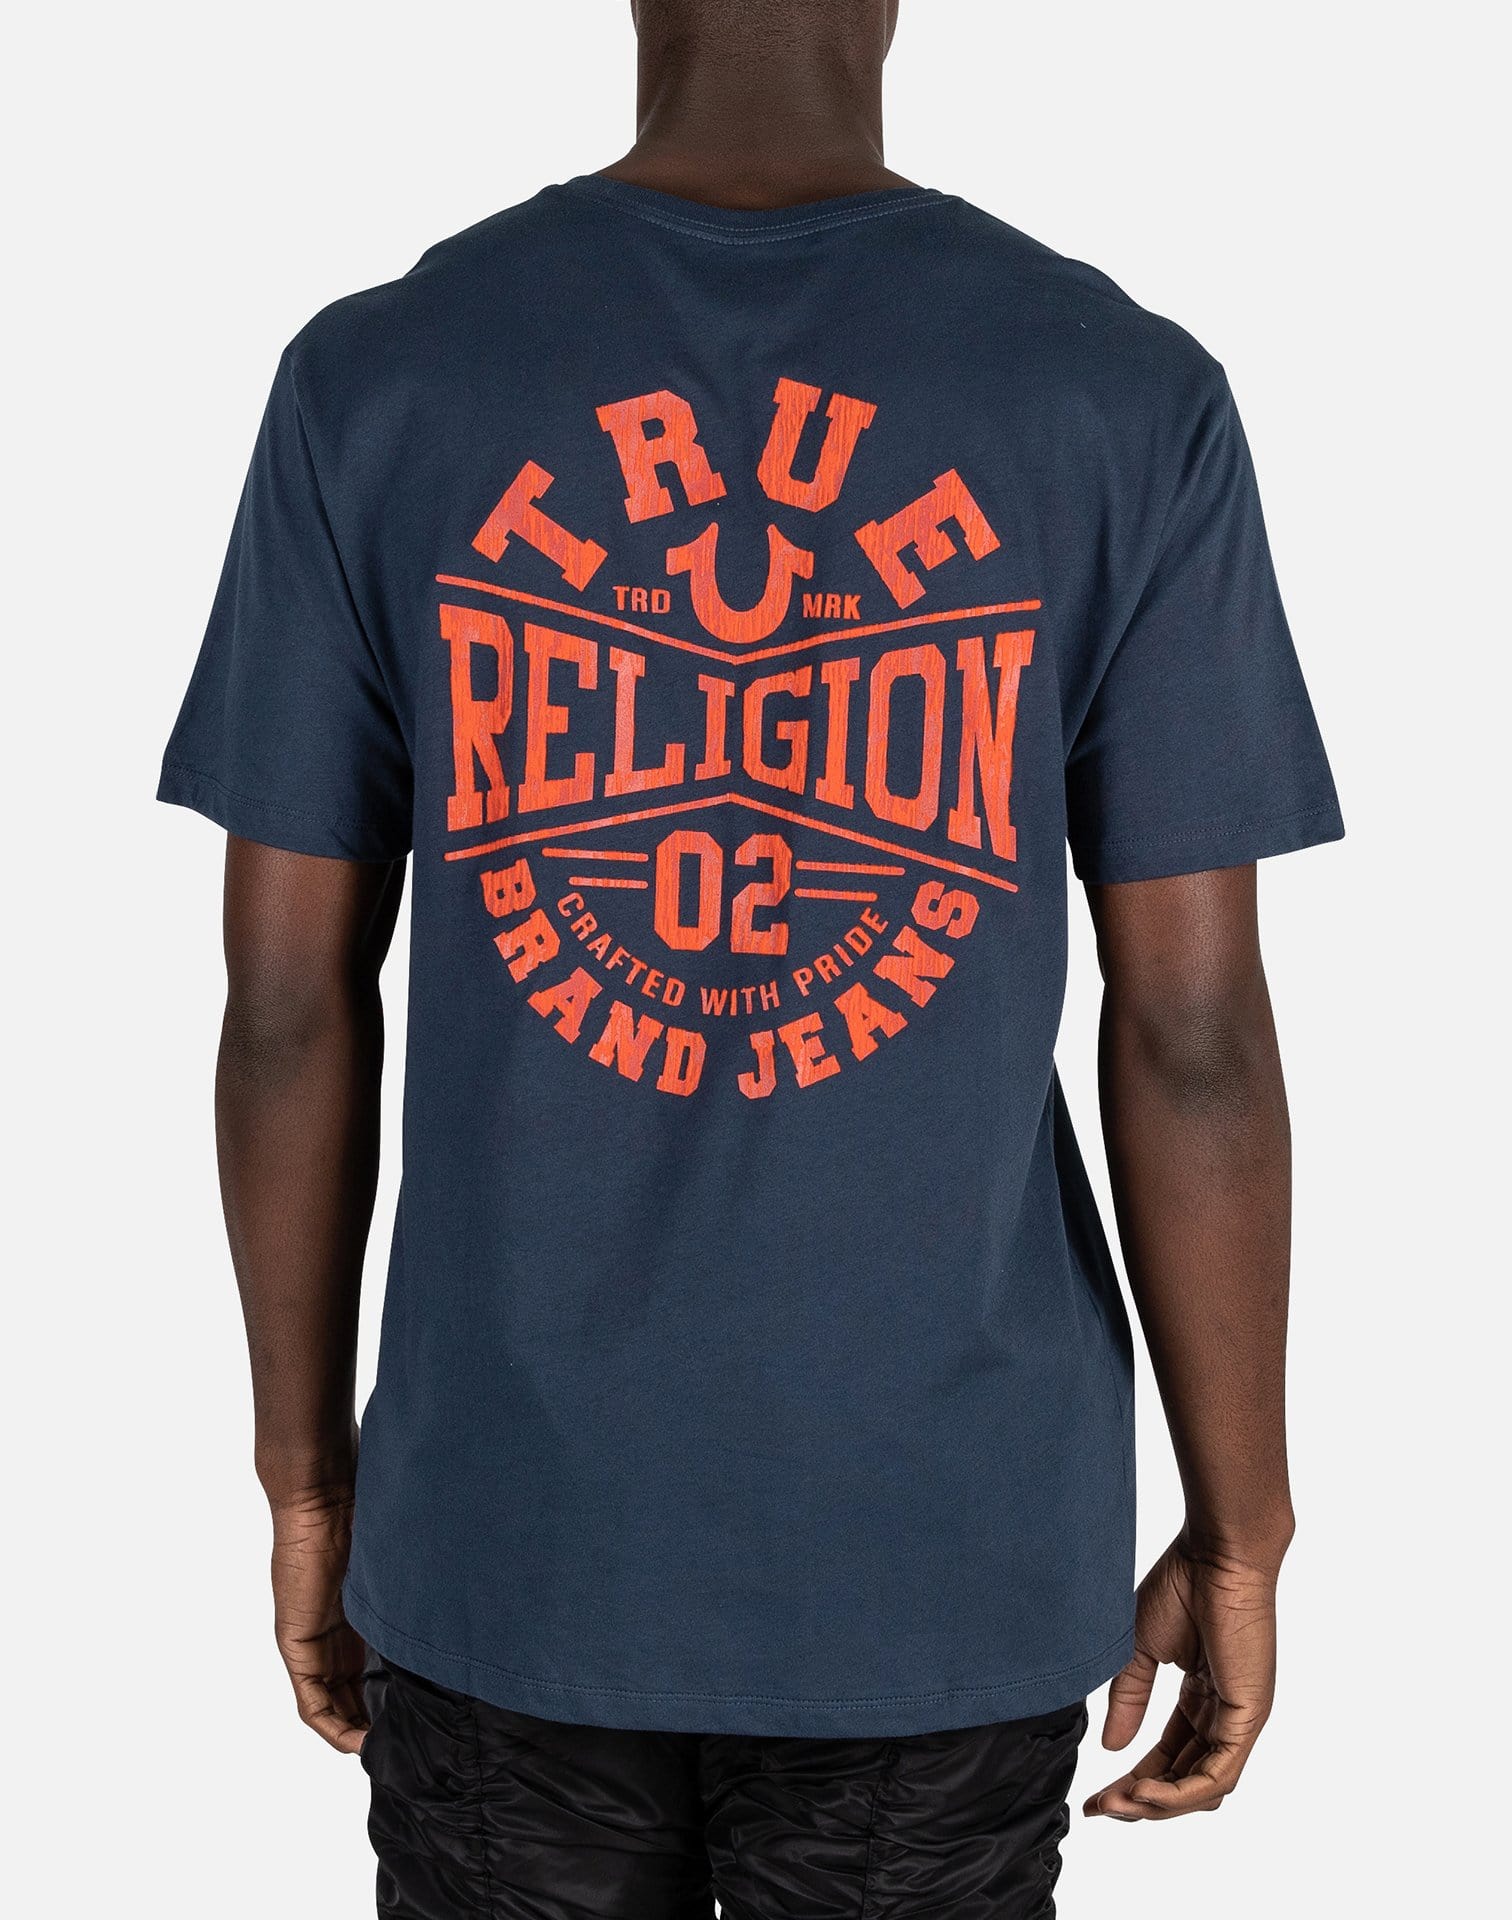 orange true religion t shirt